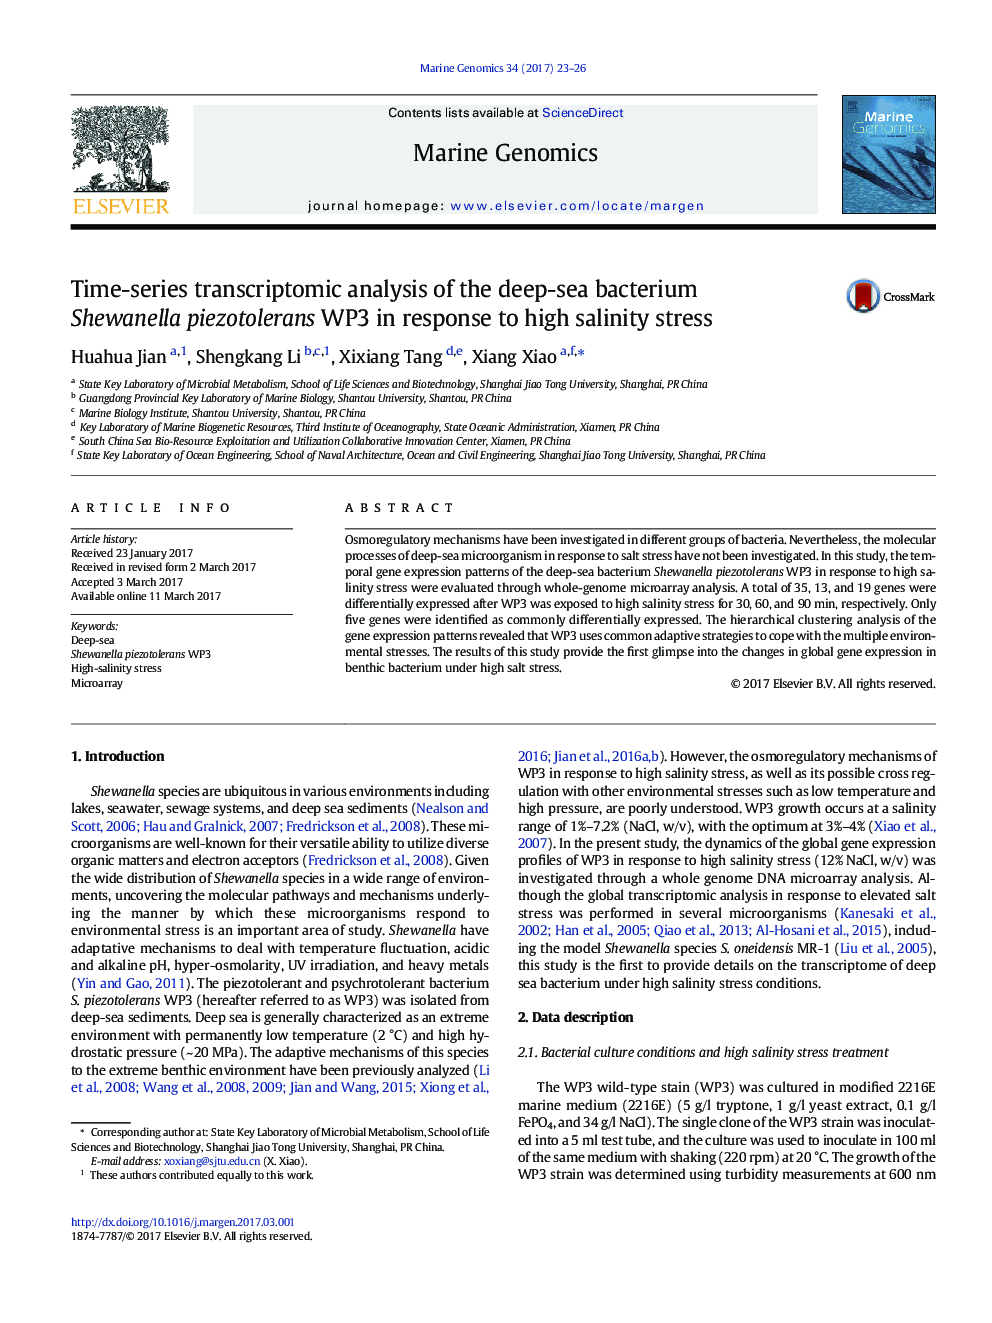 Time-series transcriptomic analysis of the deep-sea bacterium Shewanella piezotolerans WP3 in response to high salinity stress